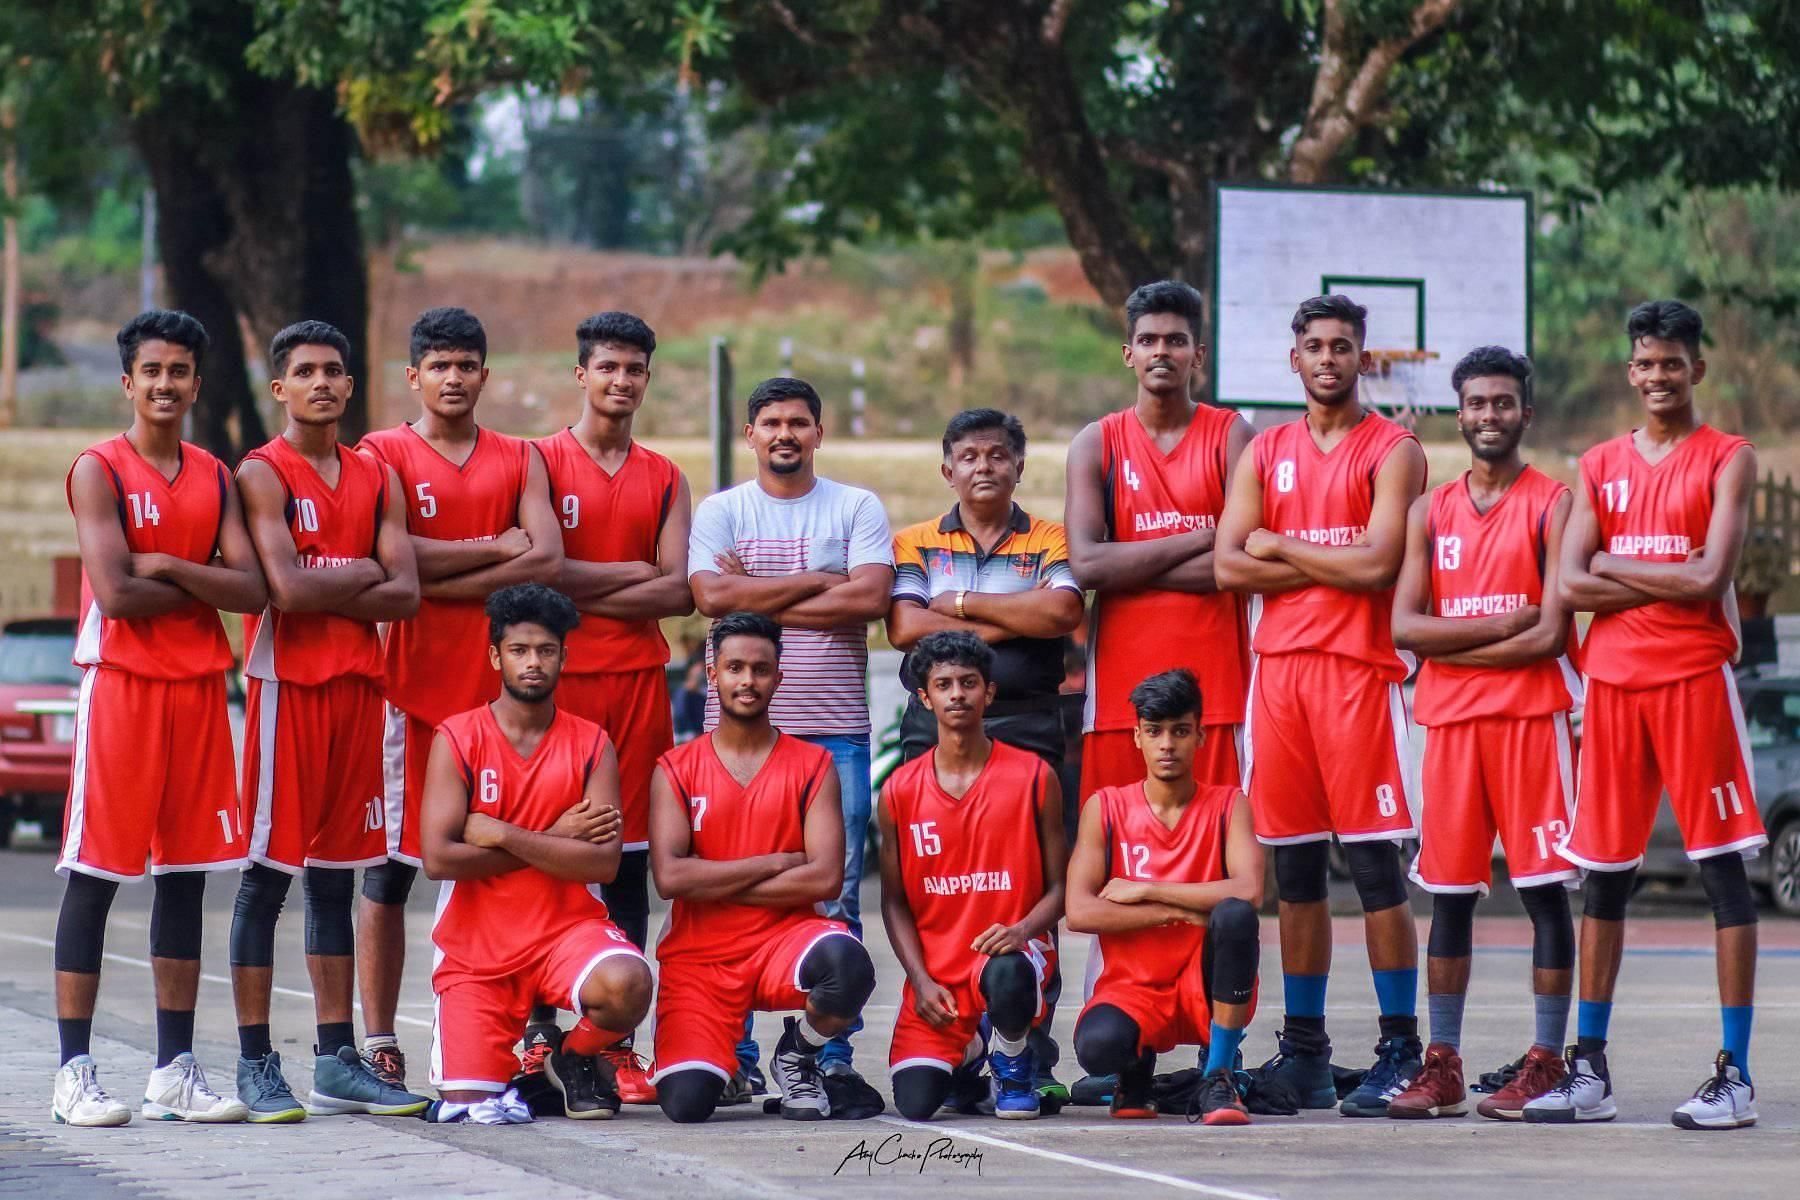 (Image Credits: Alappuzha District Basketball Association)